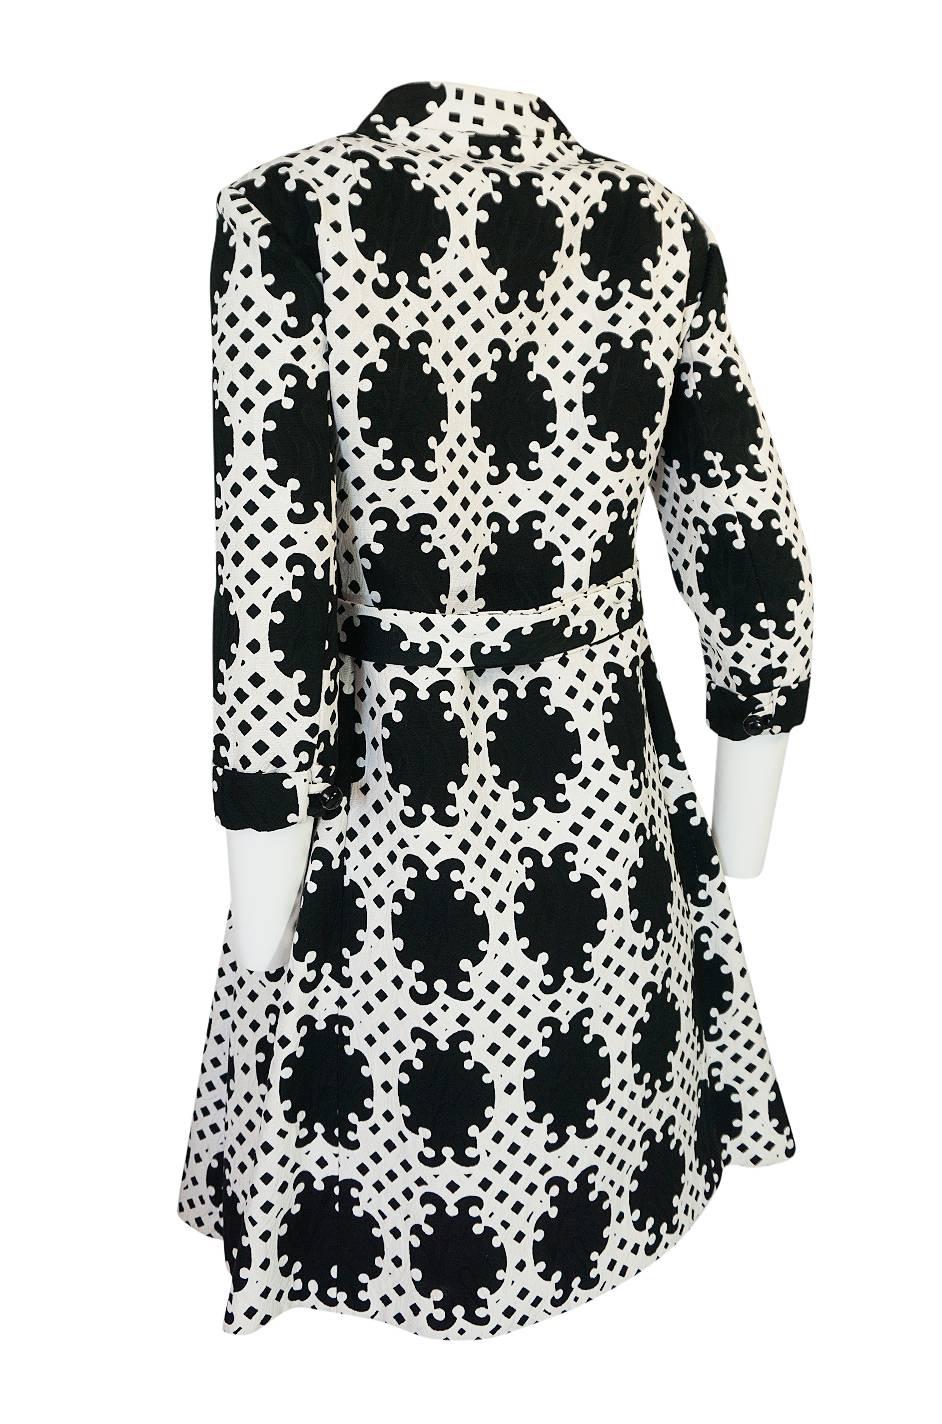 Women's Exceptional c1966 Donald Brooks Graphic Black & White Dress